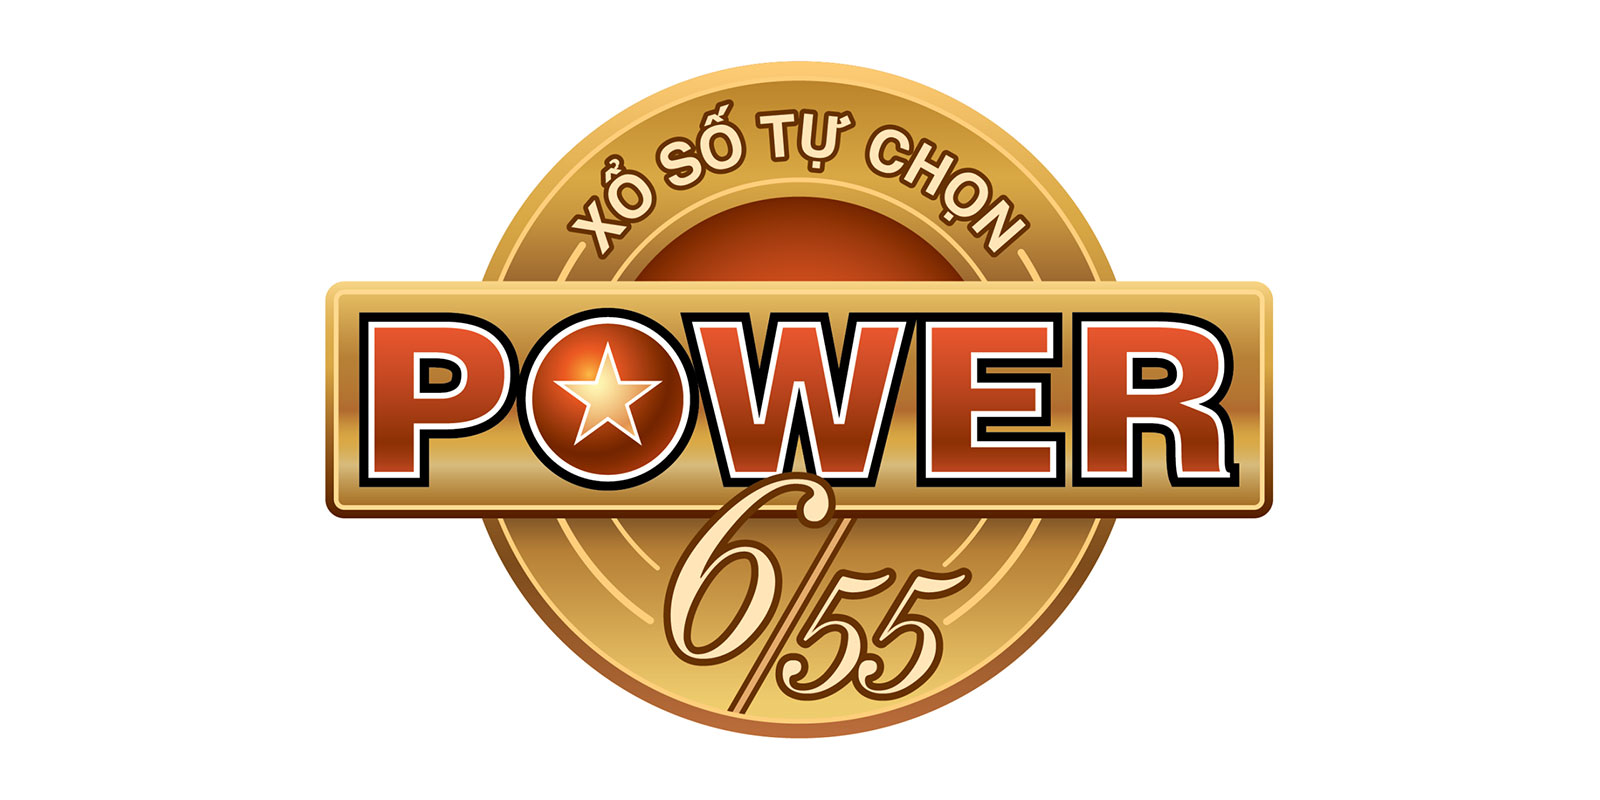 Power 6/55